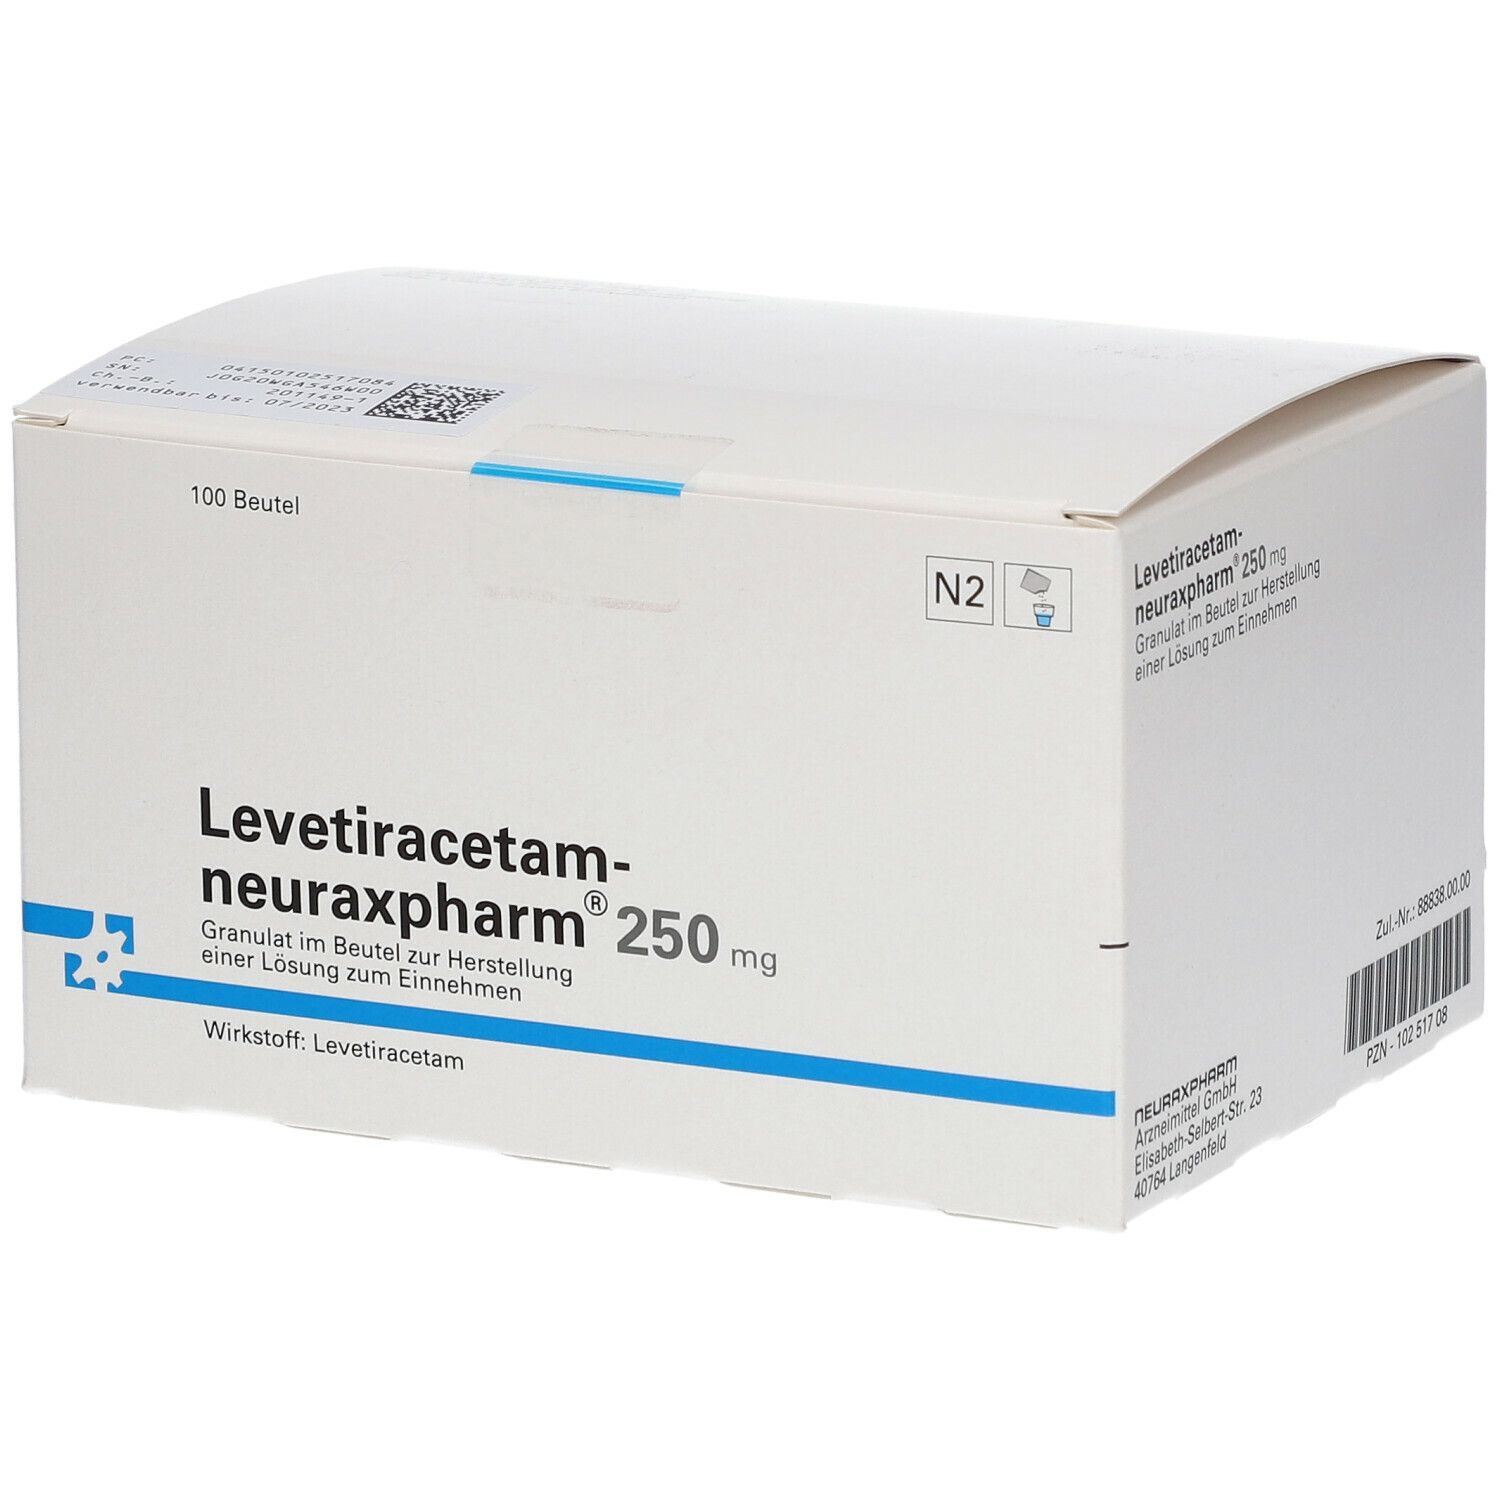 Levetiracetam-neuraxpharm® 250 mg